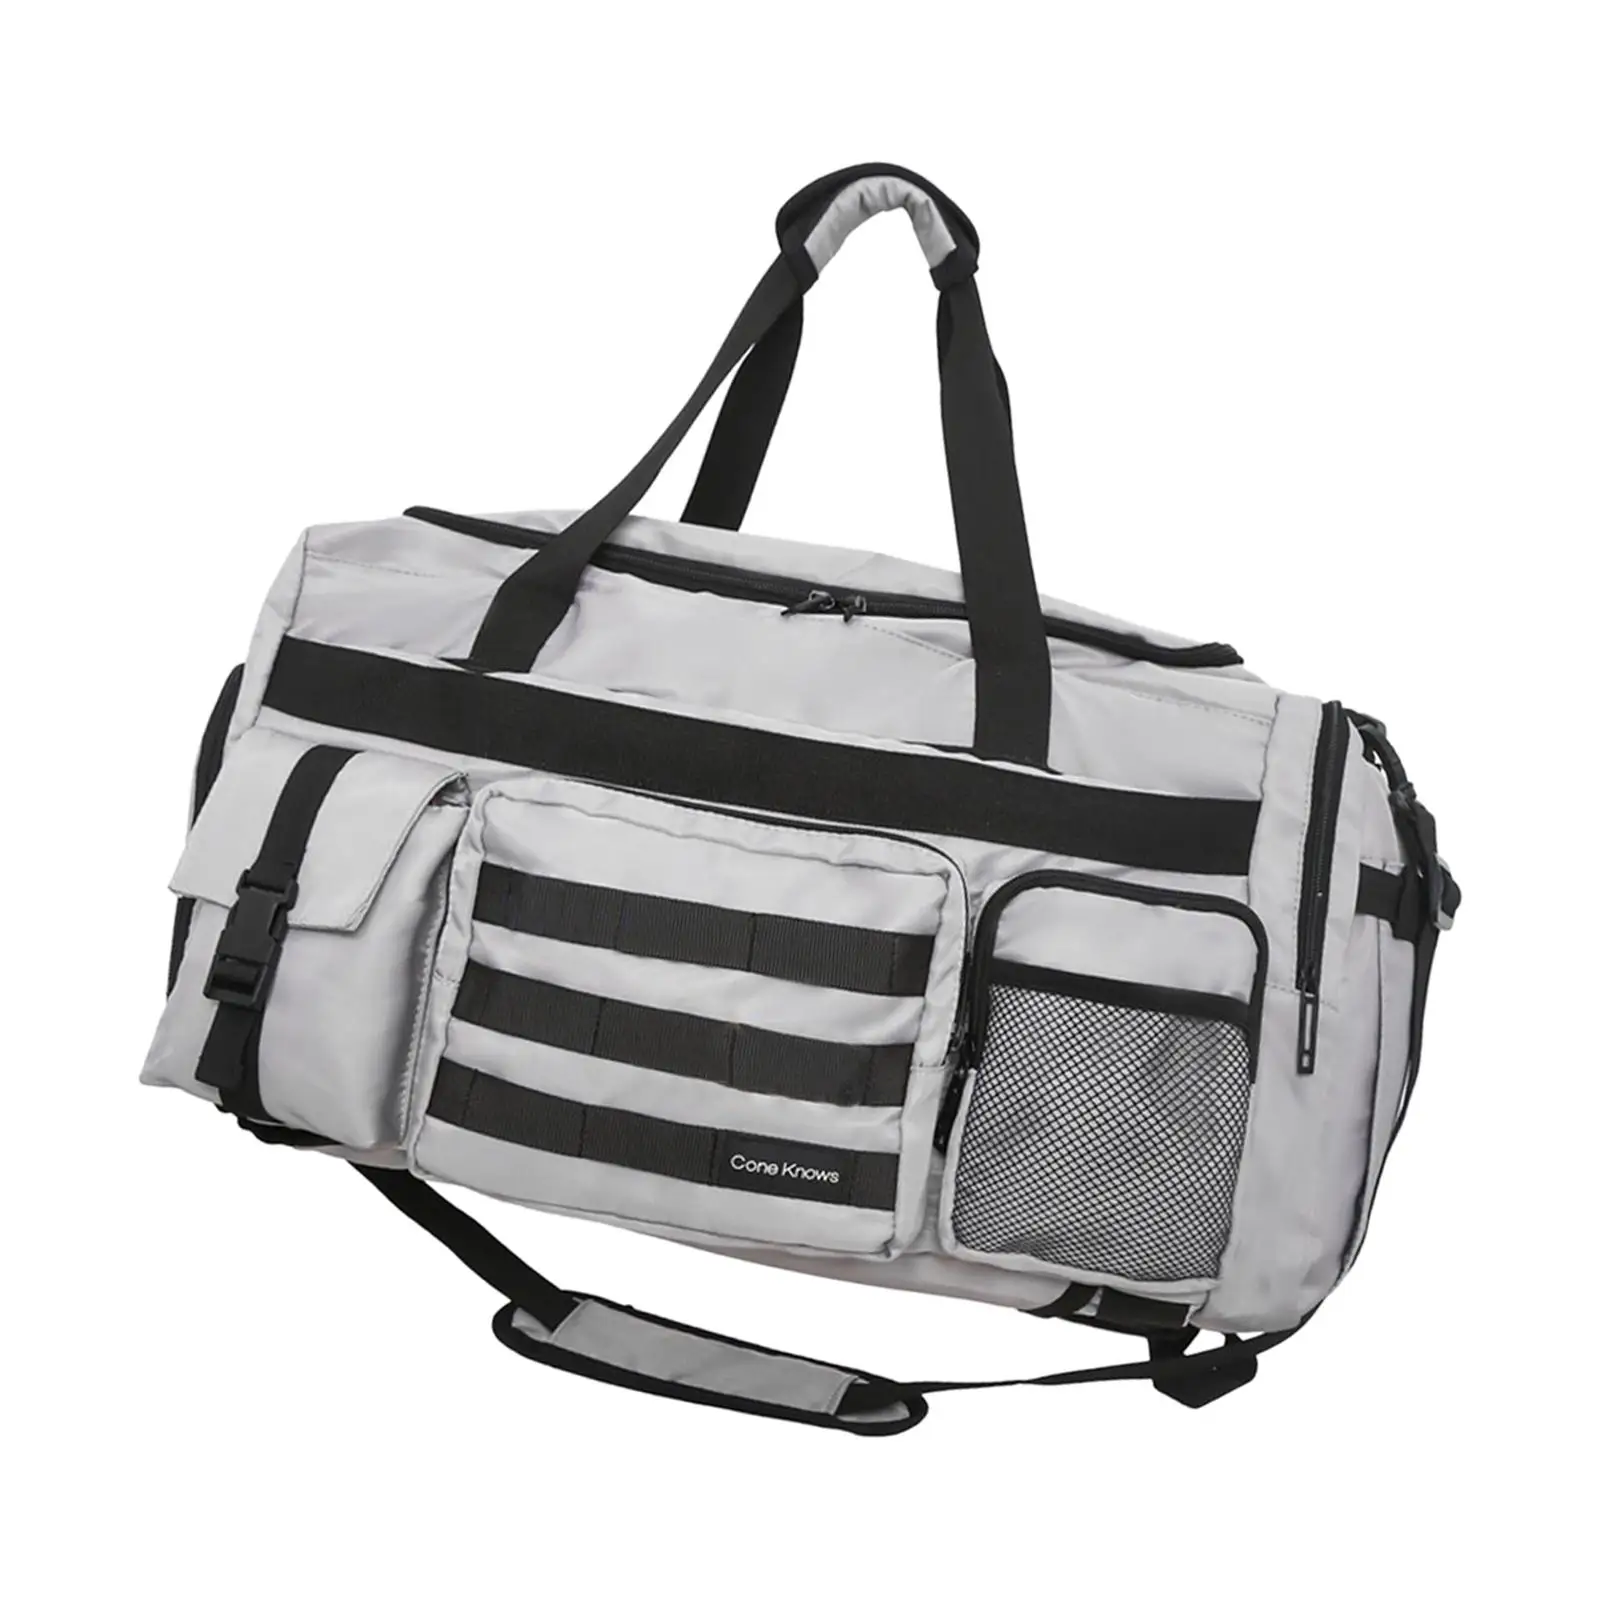 Travel Duffle Backpack Bag Sports Gym Bag Large Toiletry Pouch Men Women Weekender Bag Multipurpose Overnight Bag for Fitness